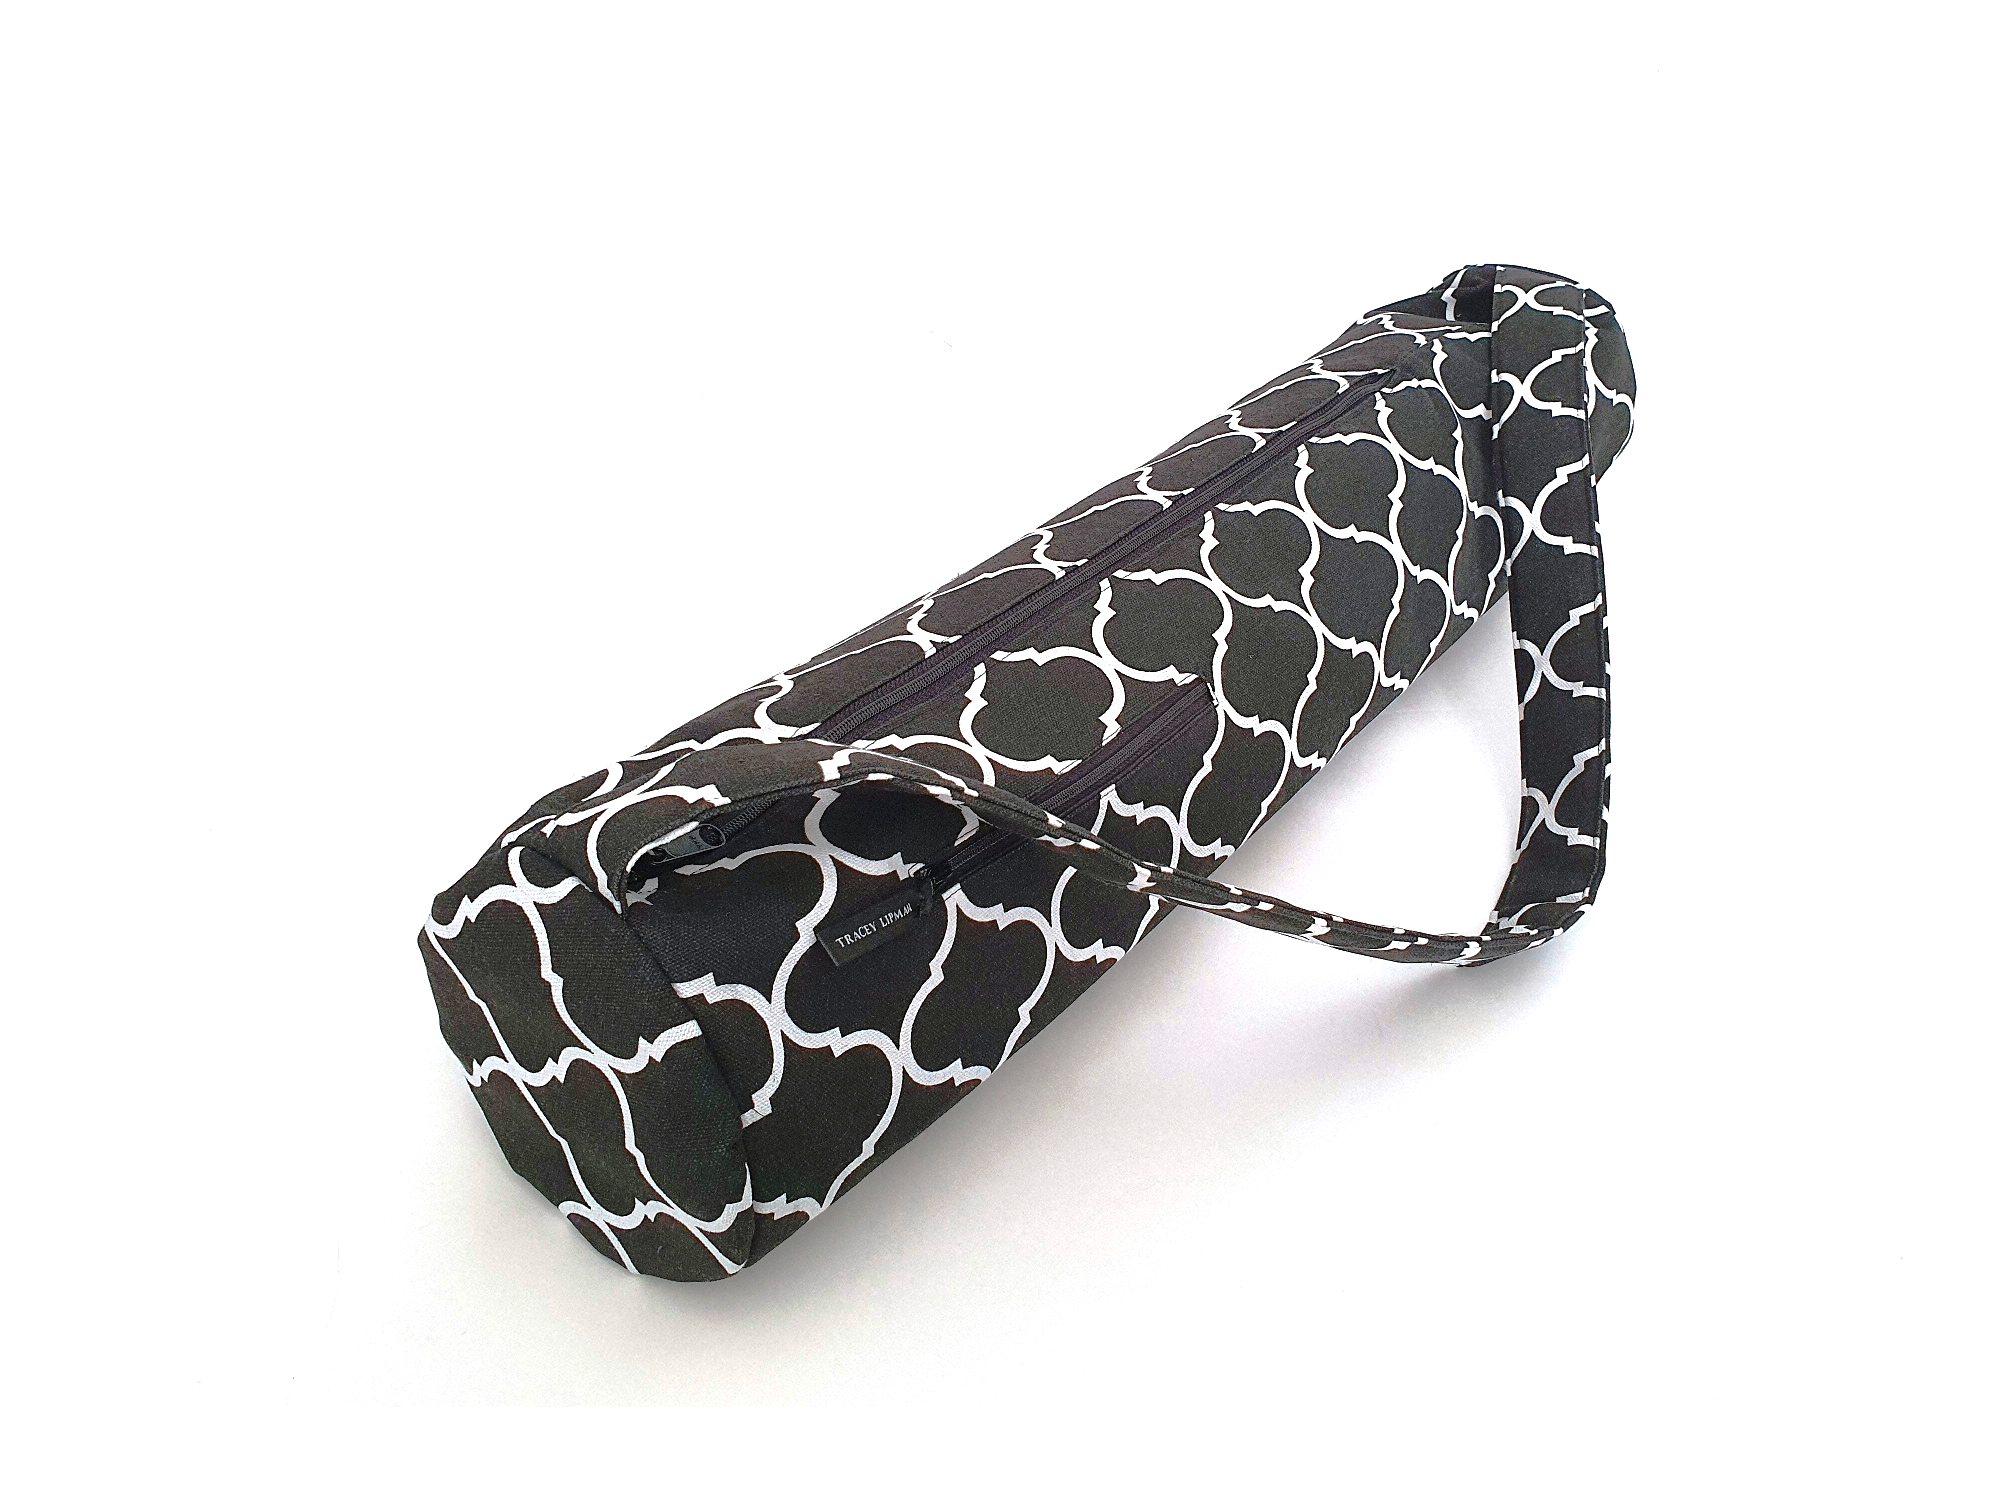 Handmade Yoga mat bag with zipper - black and white geometric